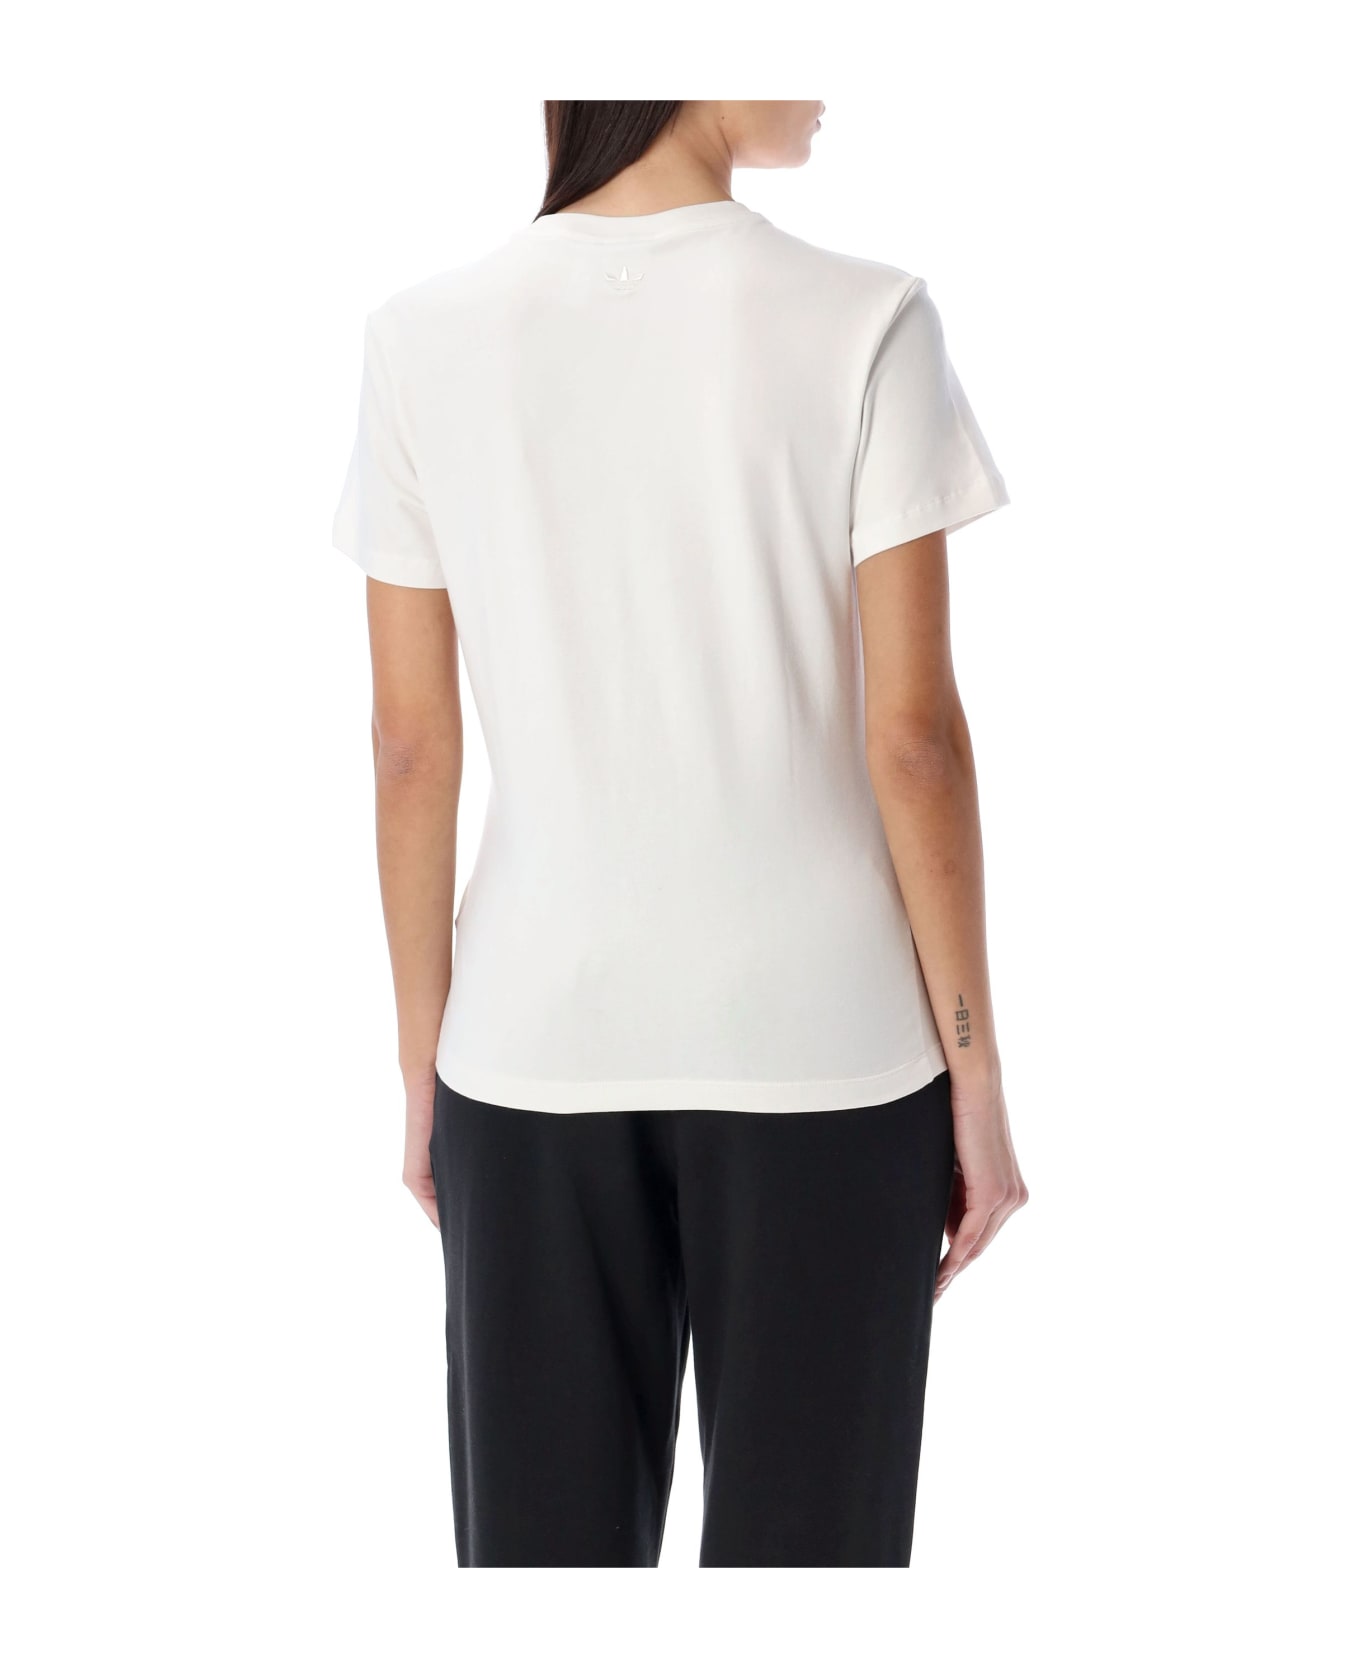 Adidas Originals Crystal Tee - WHITE Tシャツ